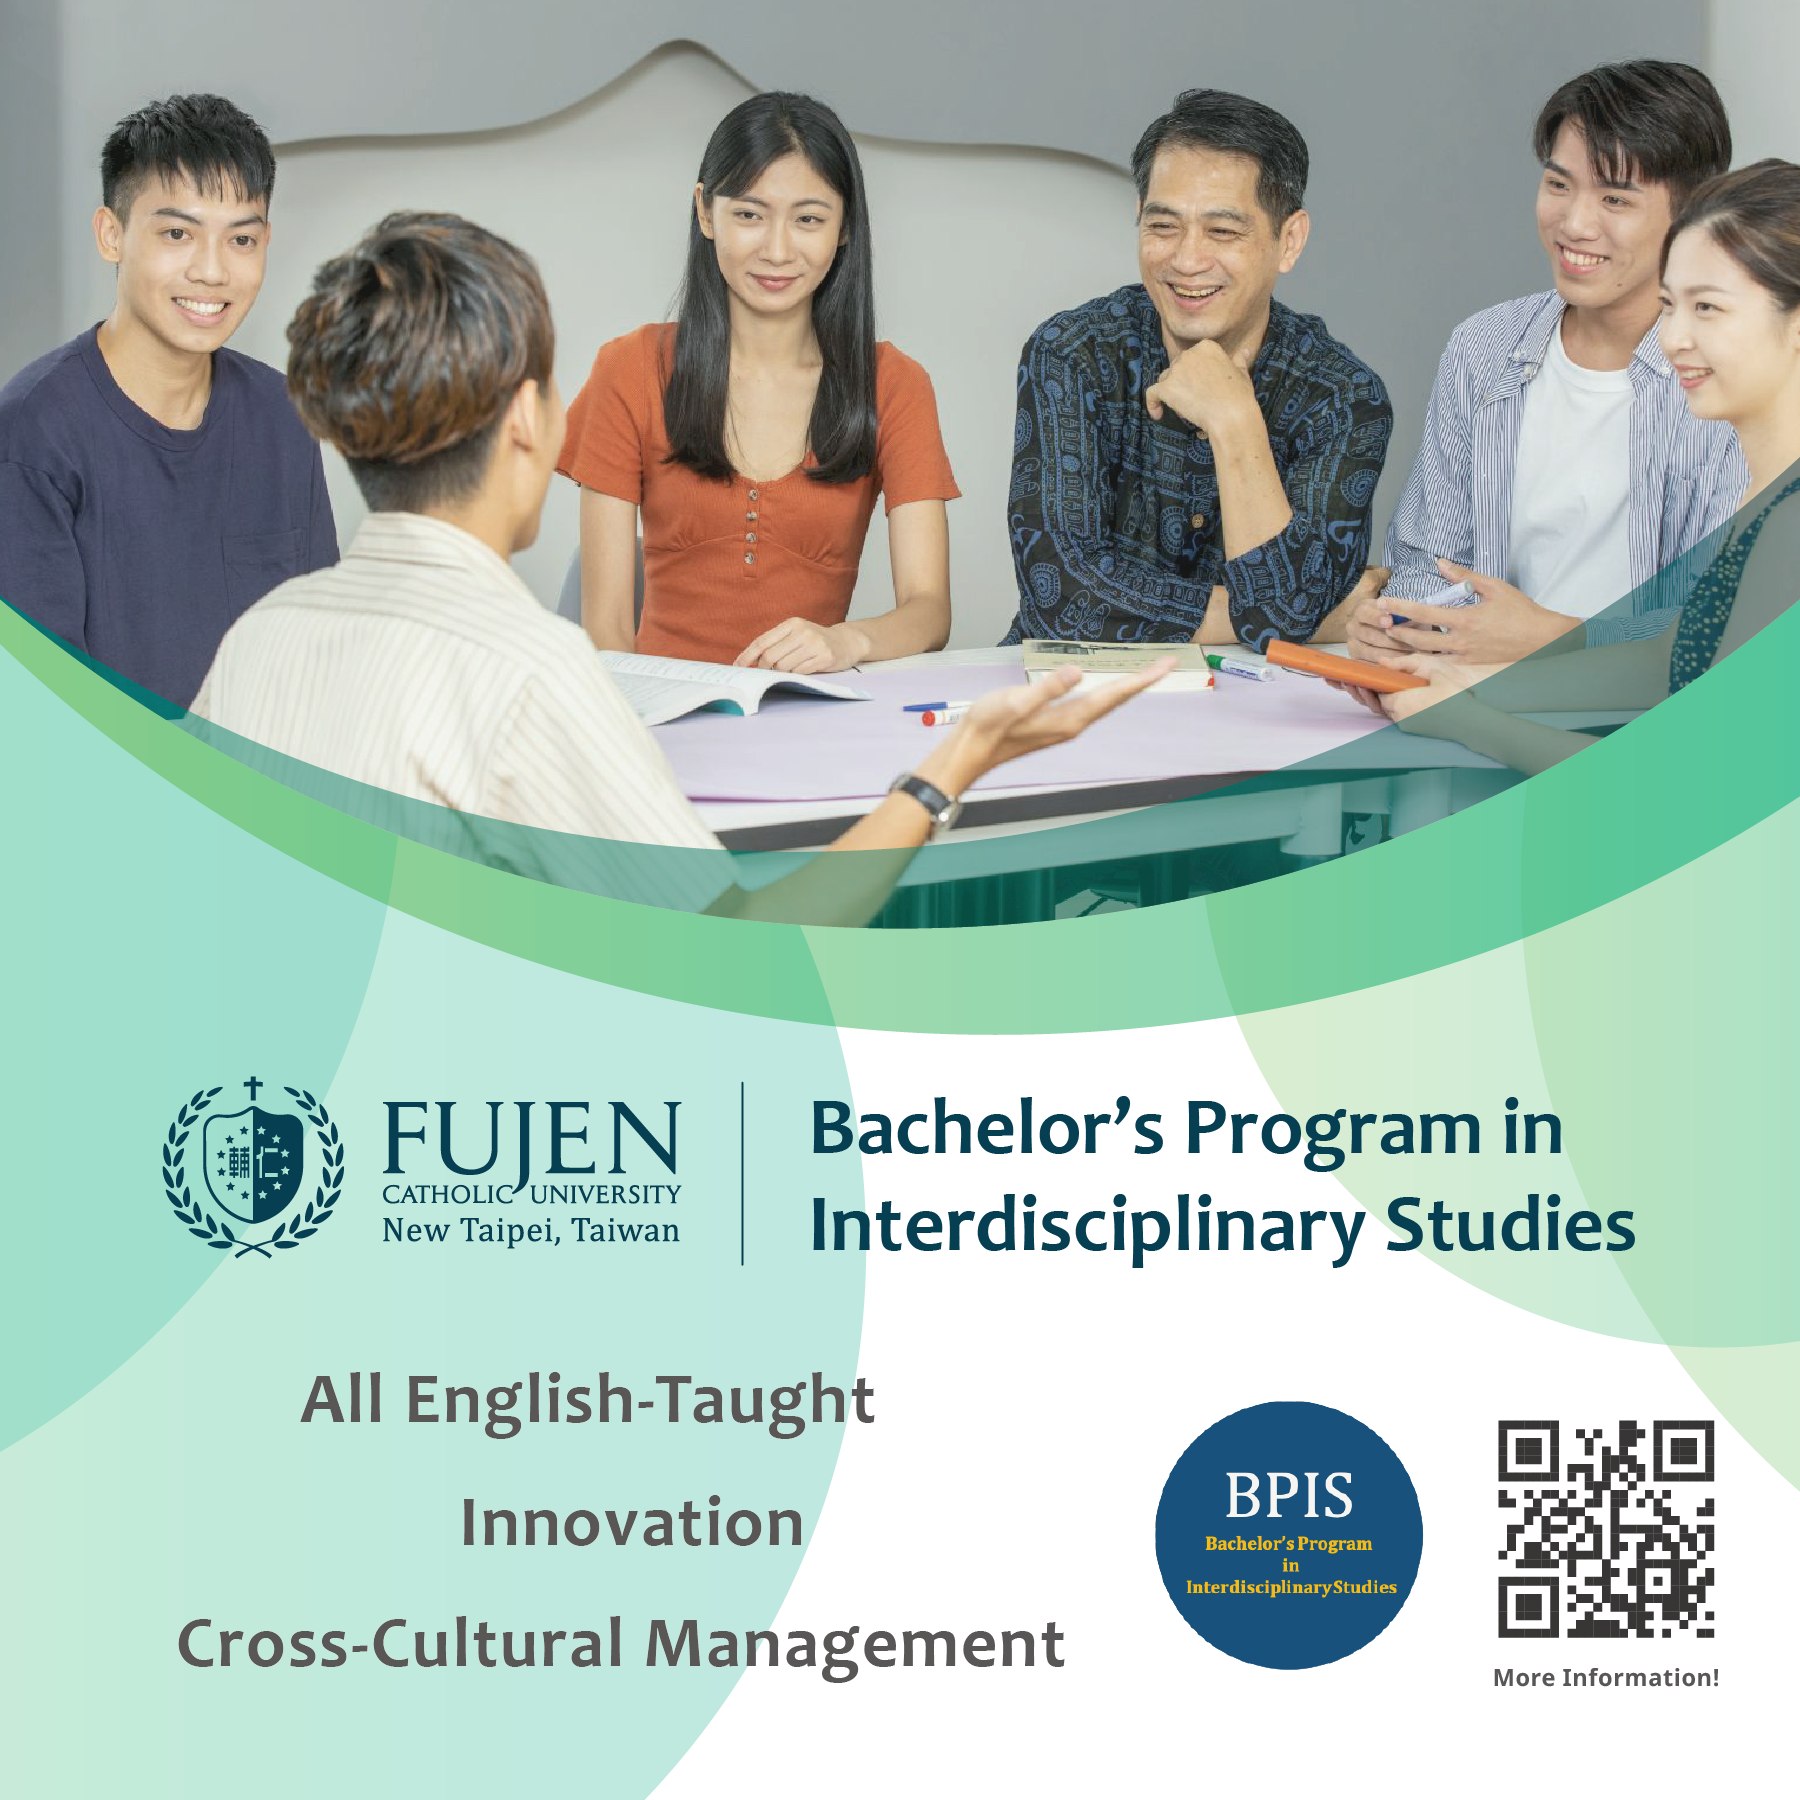 【9.6.2565】 Fujen Catholic University ได้จัดกิจกรรมออนไลน์แนะนำหลักสูตร Bachelor’s Program in Interdisciplinary Studies (All english-Taught Innovation Cross-Cultural Management)